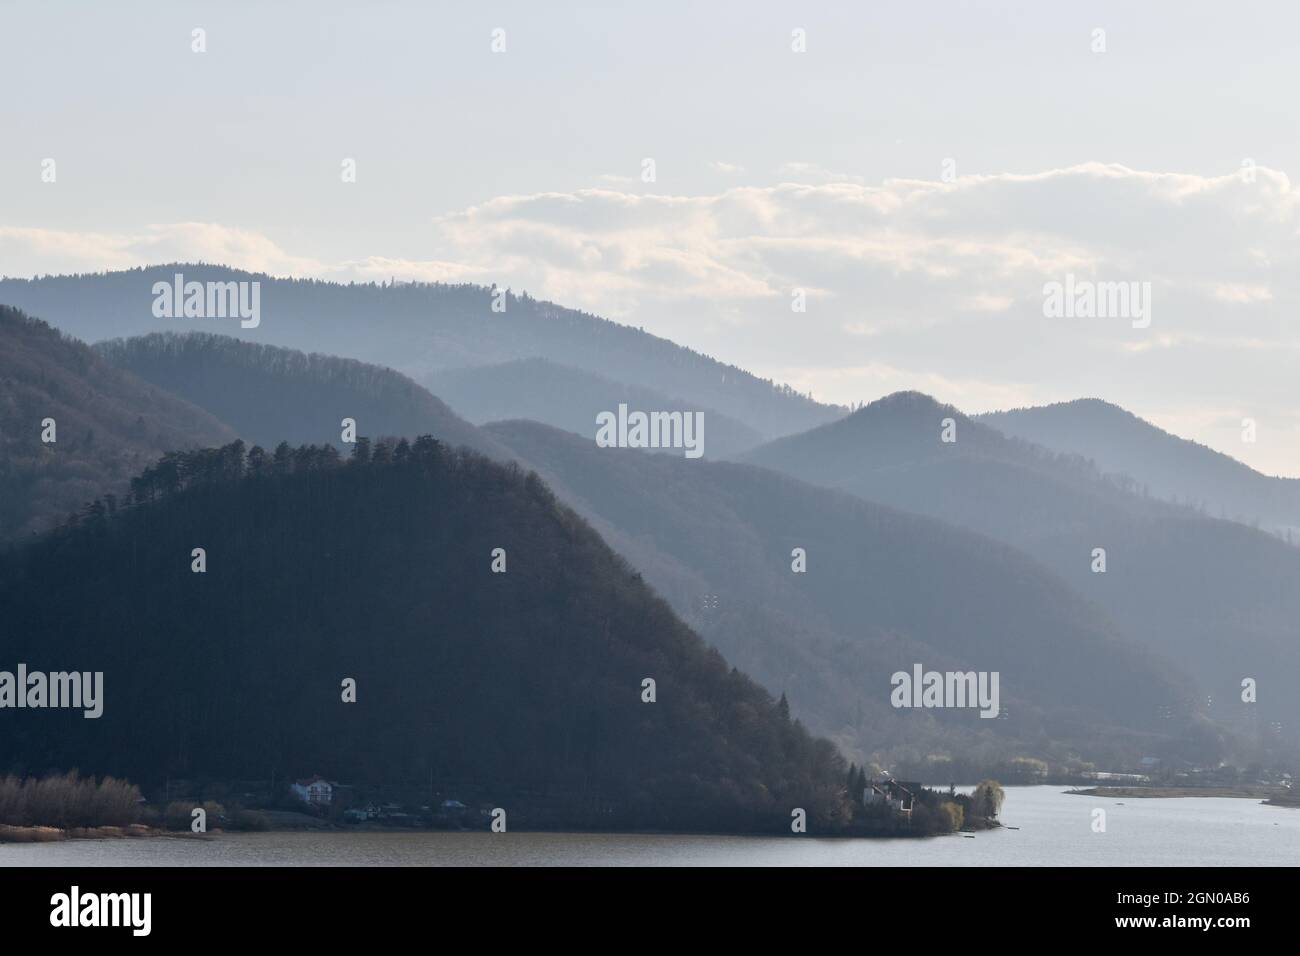 Scenic view of a mountainous landscape in Piatra Neamt, Romania Stock Photo